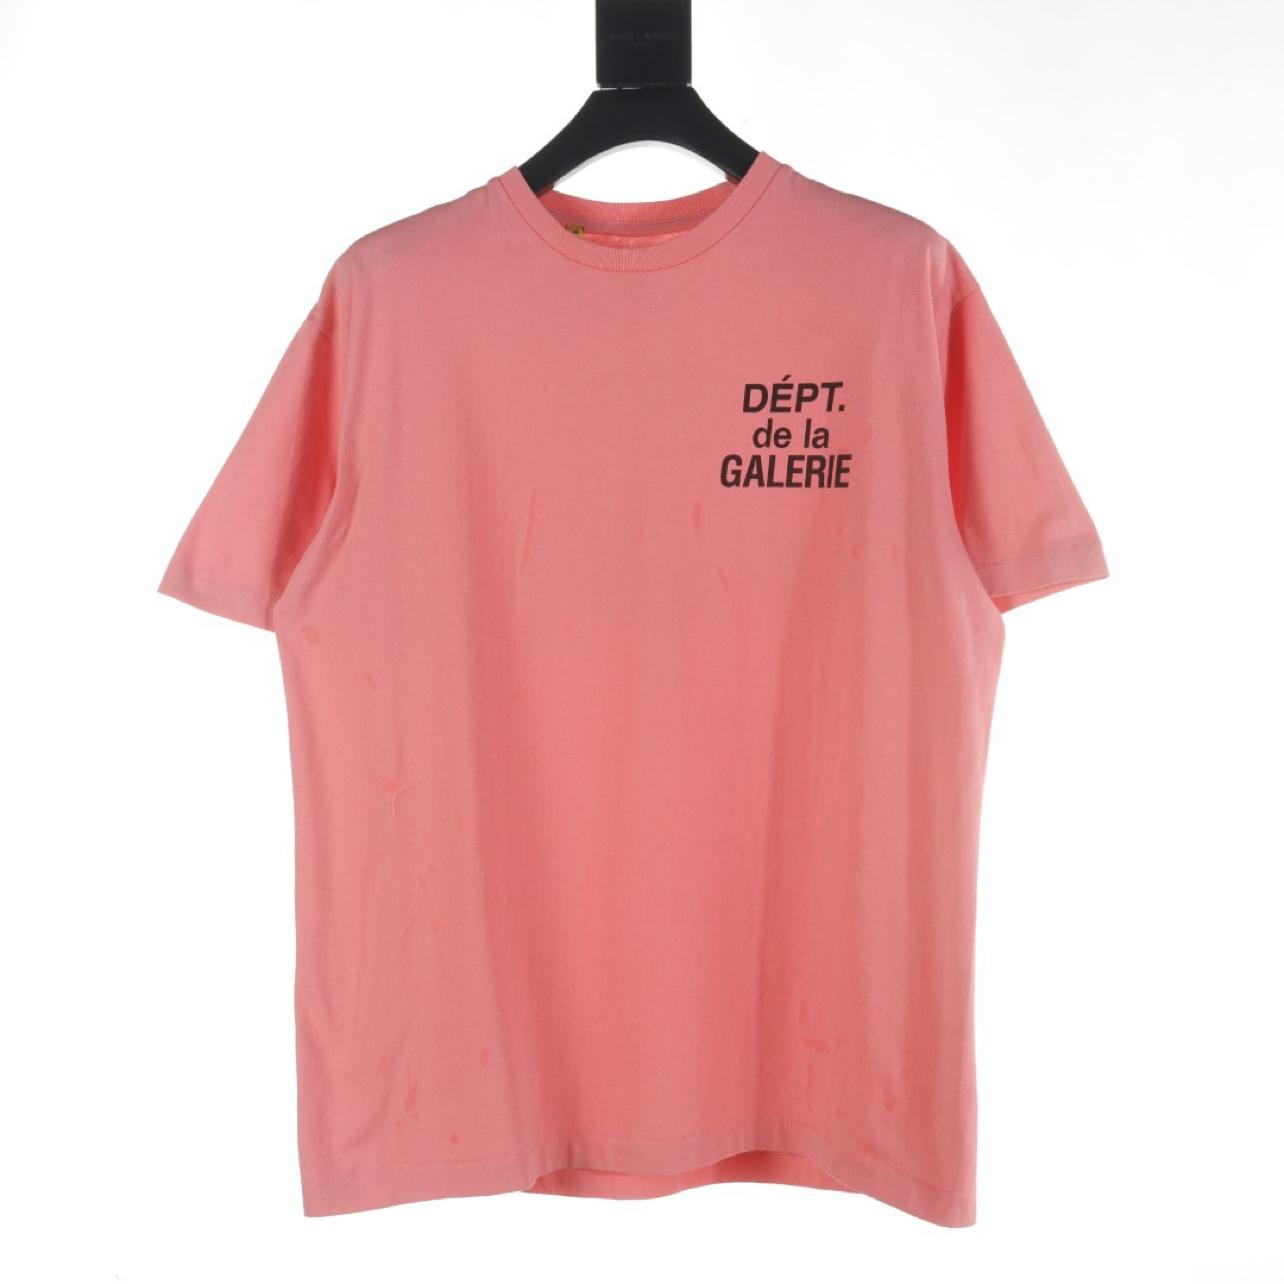 Gallery Dept.Cotton-Jersey T-Shirt - DesignerGu